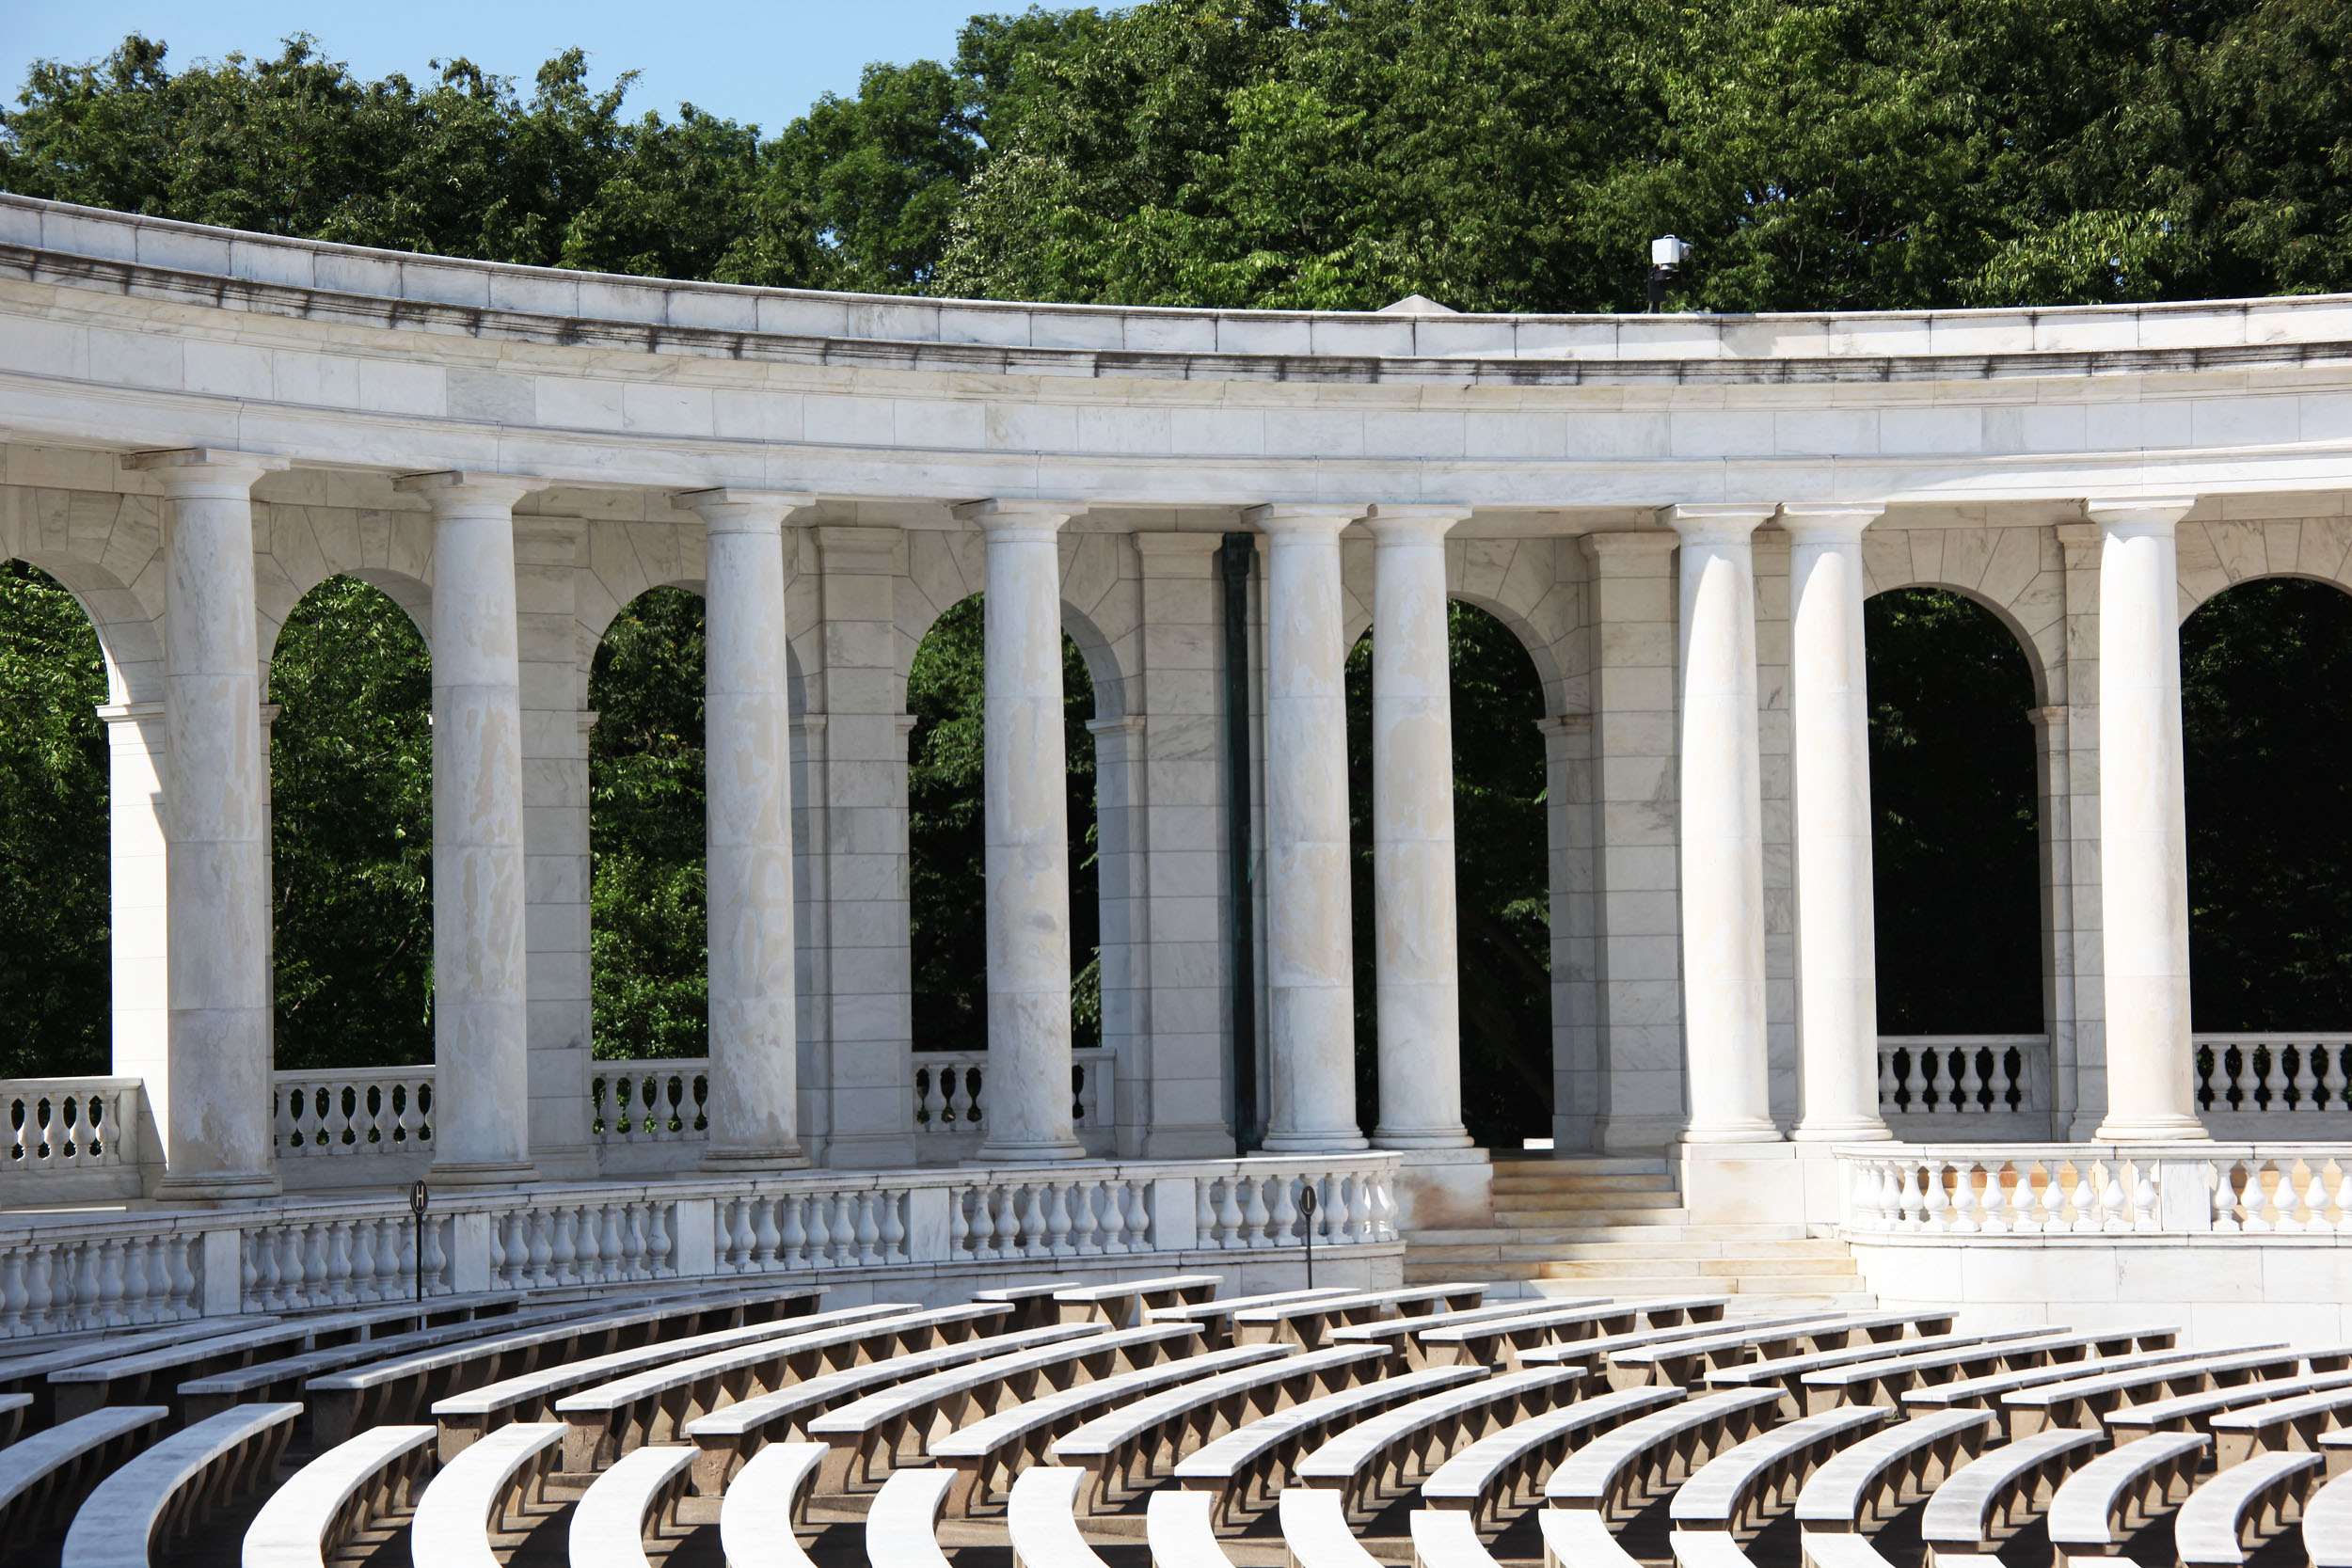 memorial amphitheater4 The Memorial Amphitheater at Arlington National Cemetery